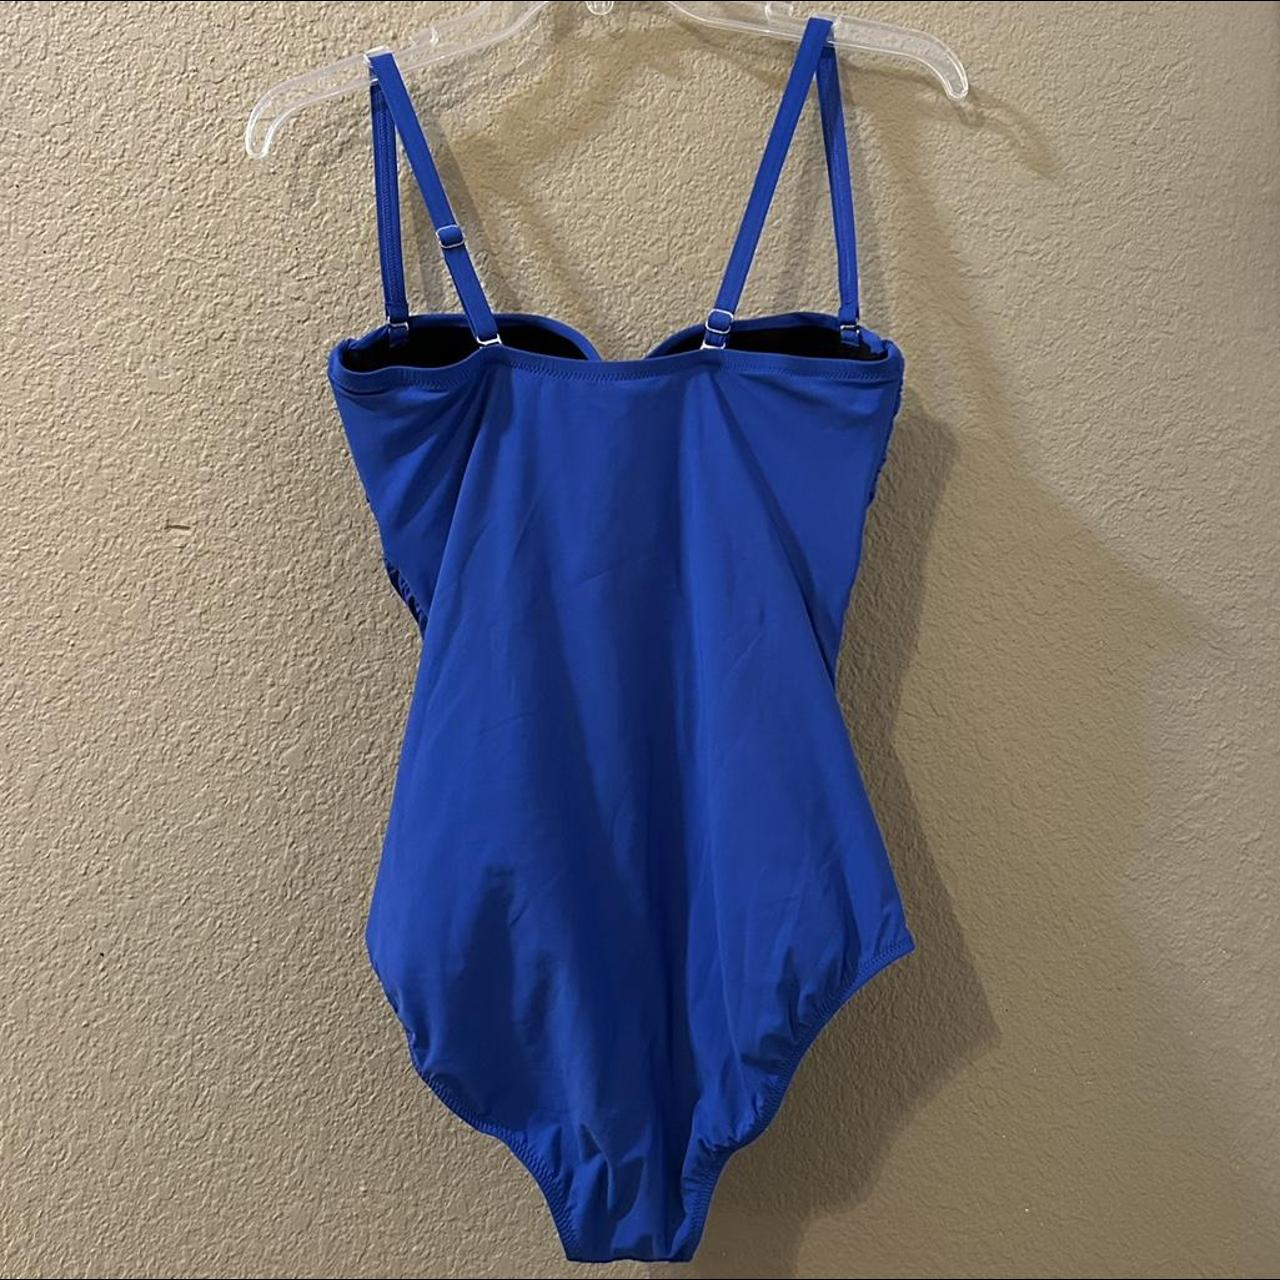 blue one piece swimsuit - Depop